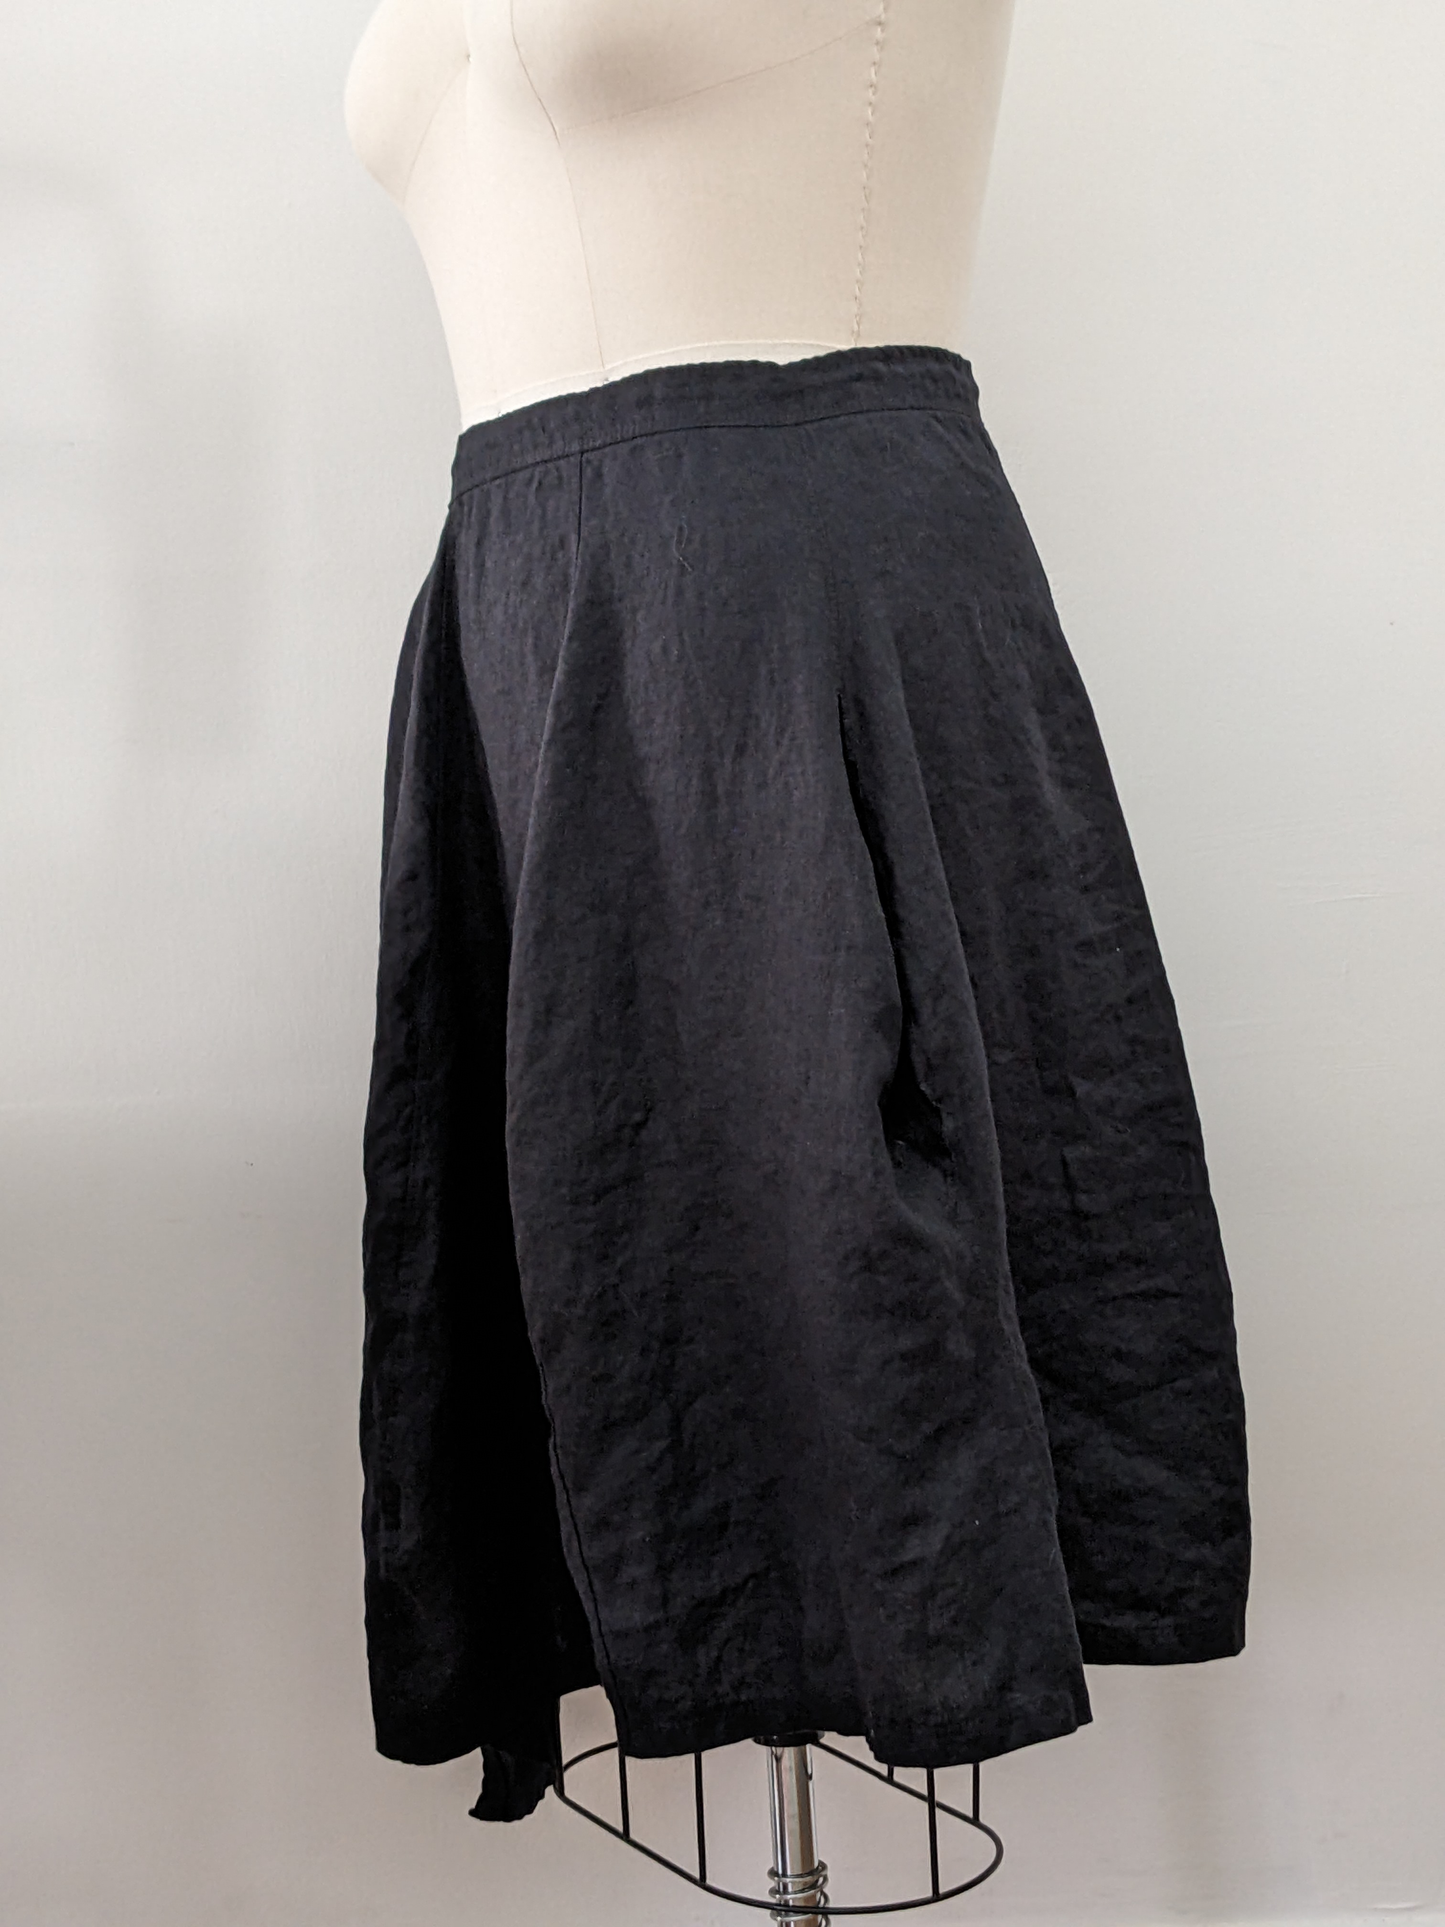 Secretly Eccentric Skirt - Secret Lentil